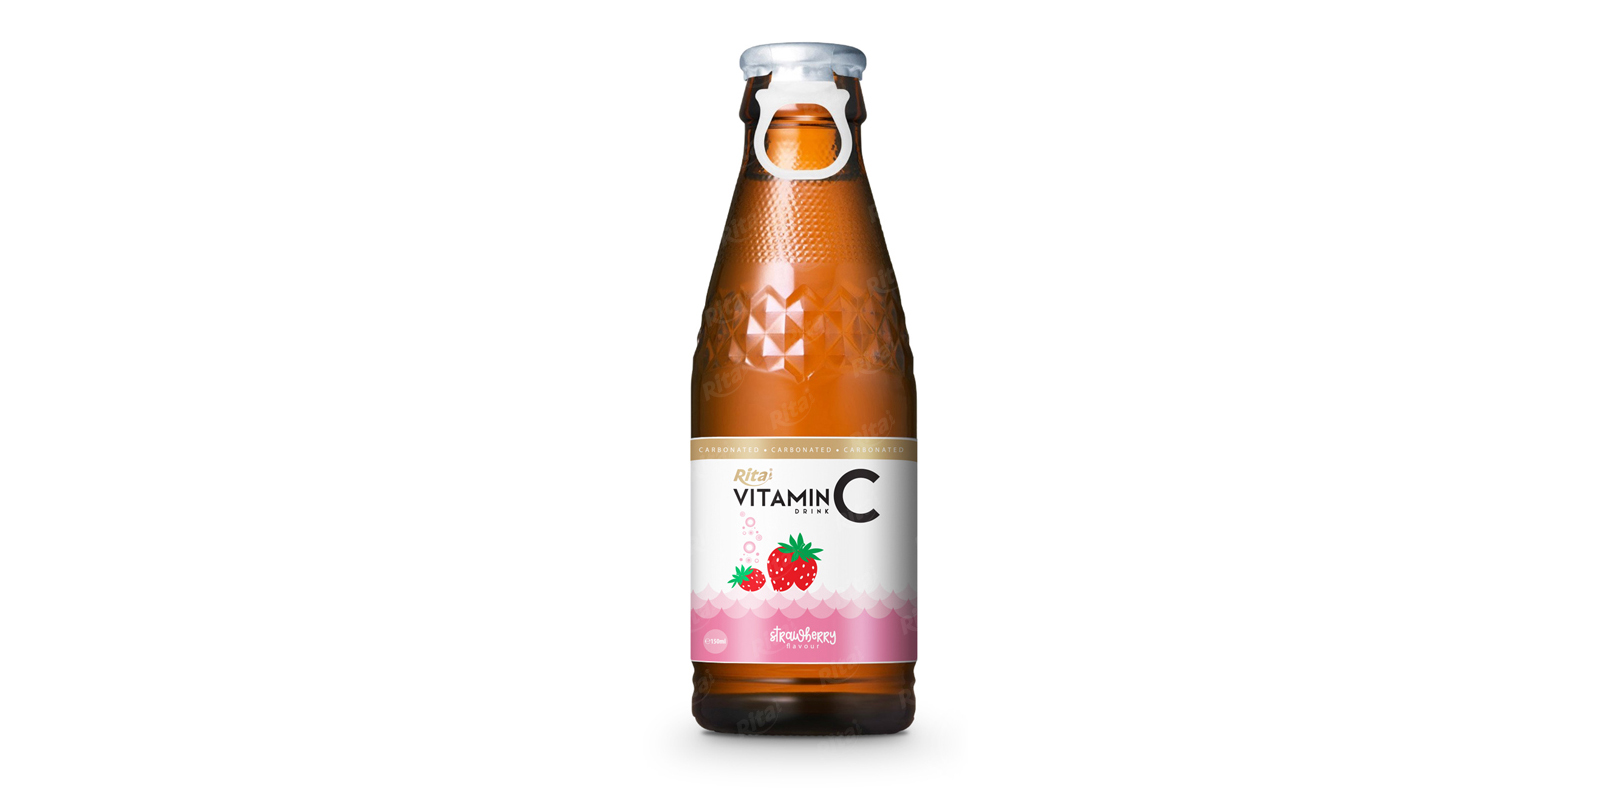 Vitamin C glass bottle Rita beverages